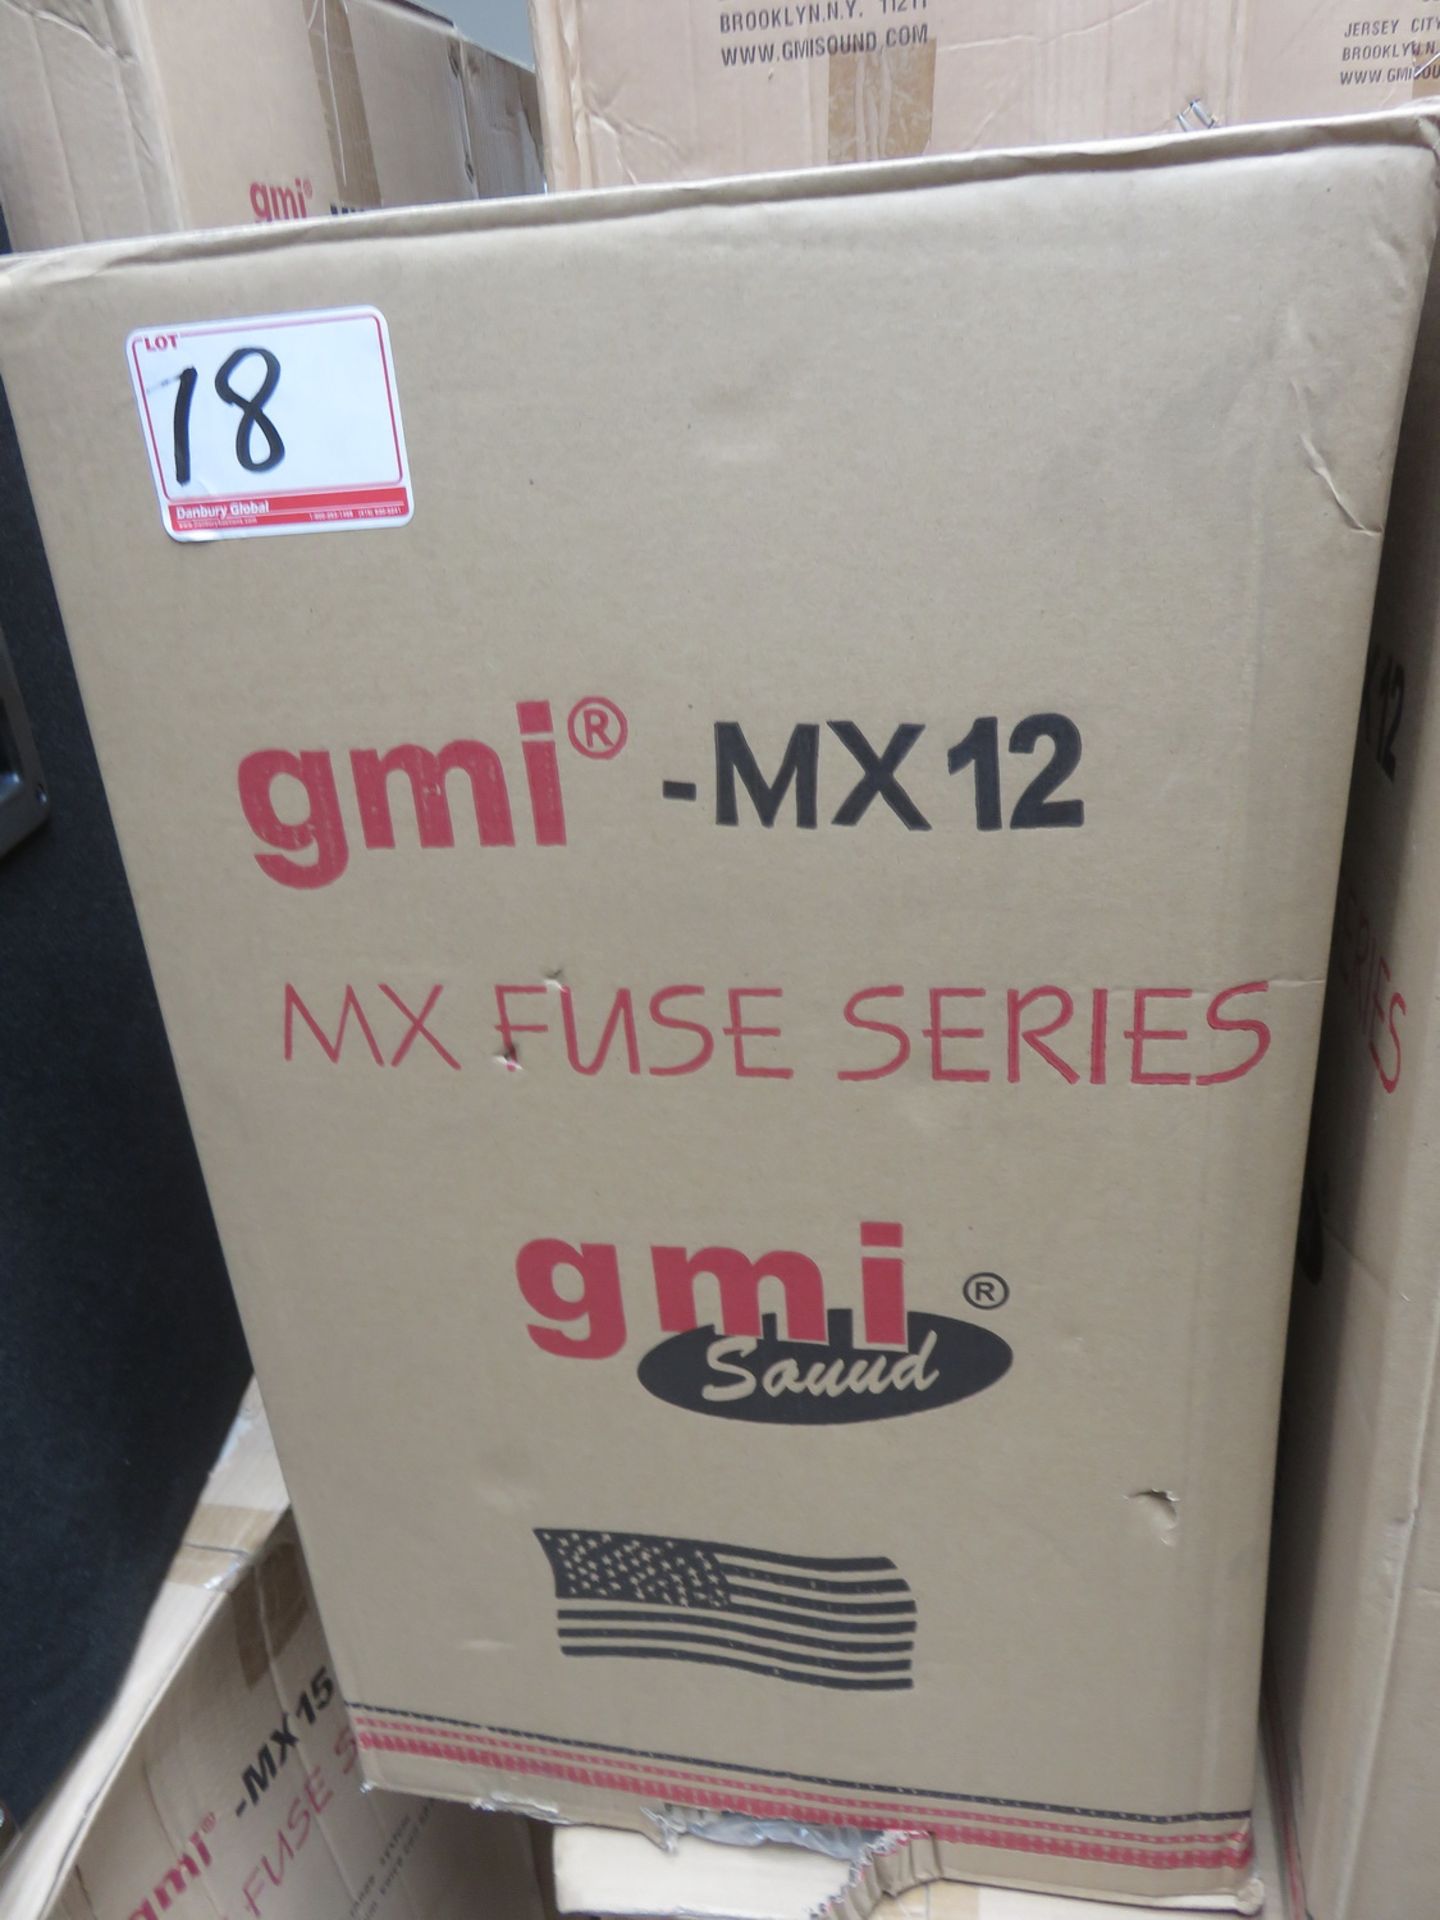 UNITS - GMI MX12, MX FUSE SERIES FULL RANGE 12" LOUDSPEAKERS (IN BOX) - Image 4 of 4